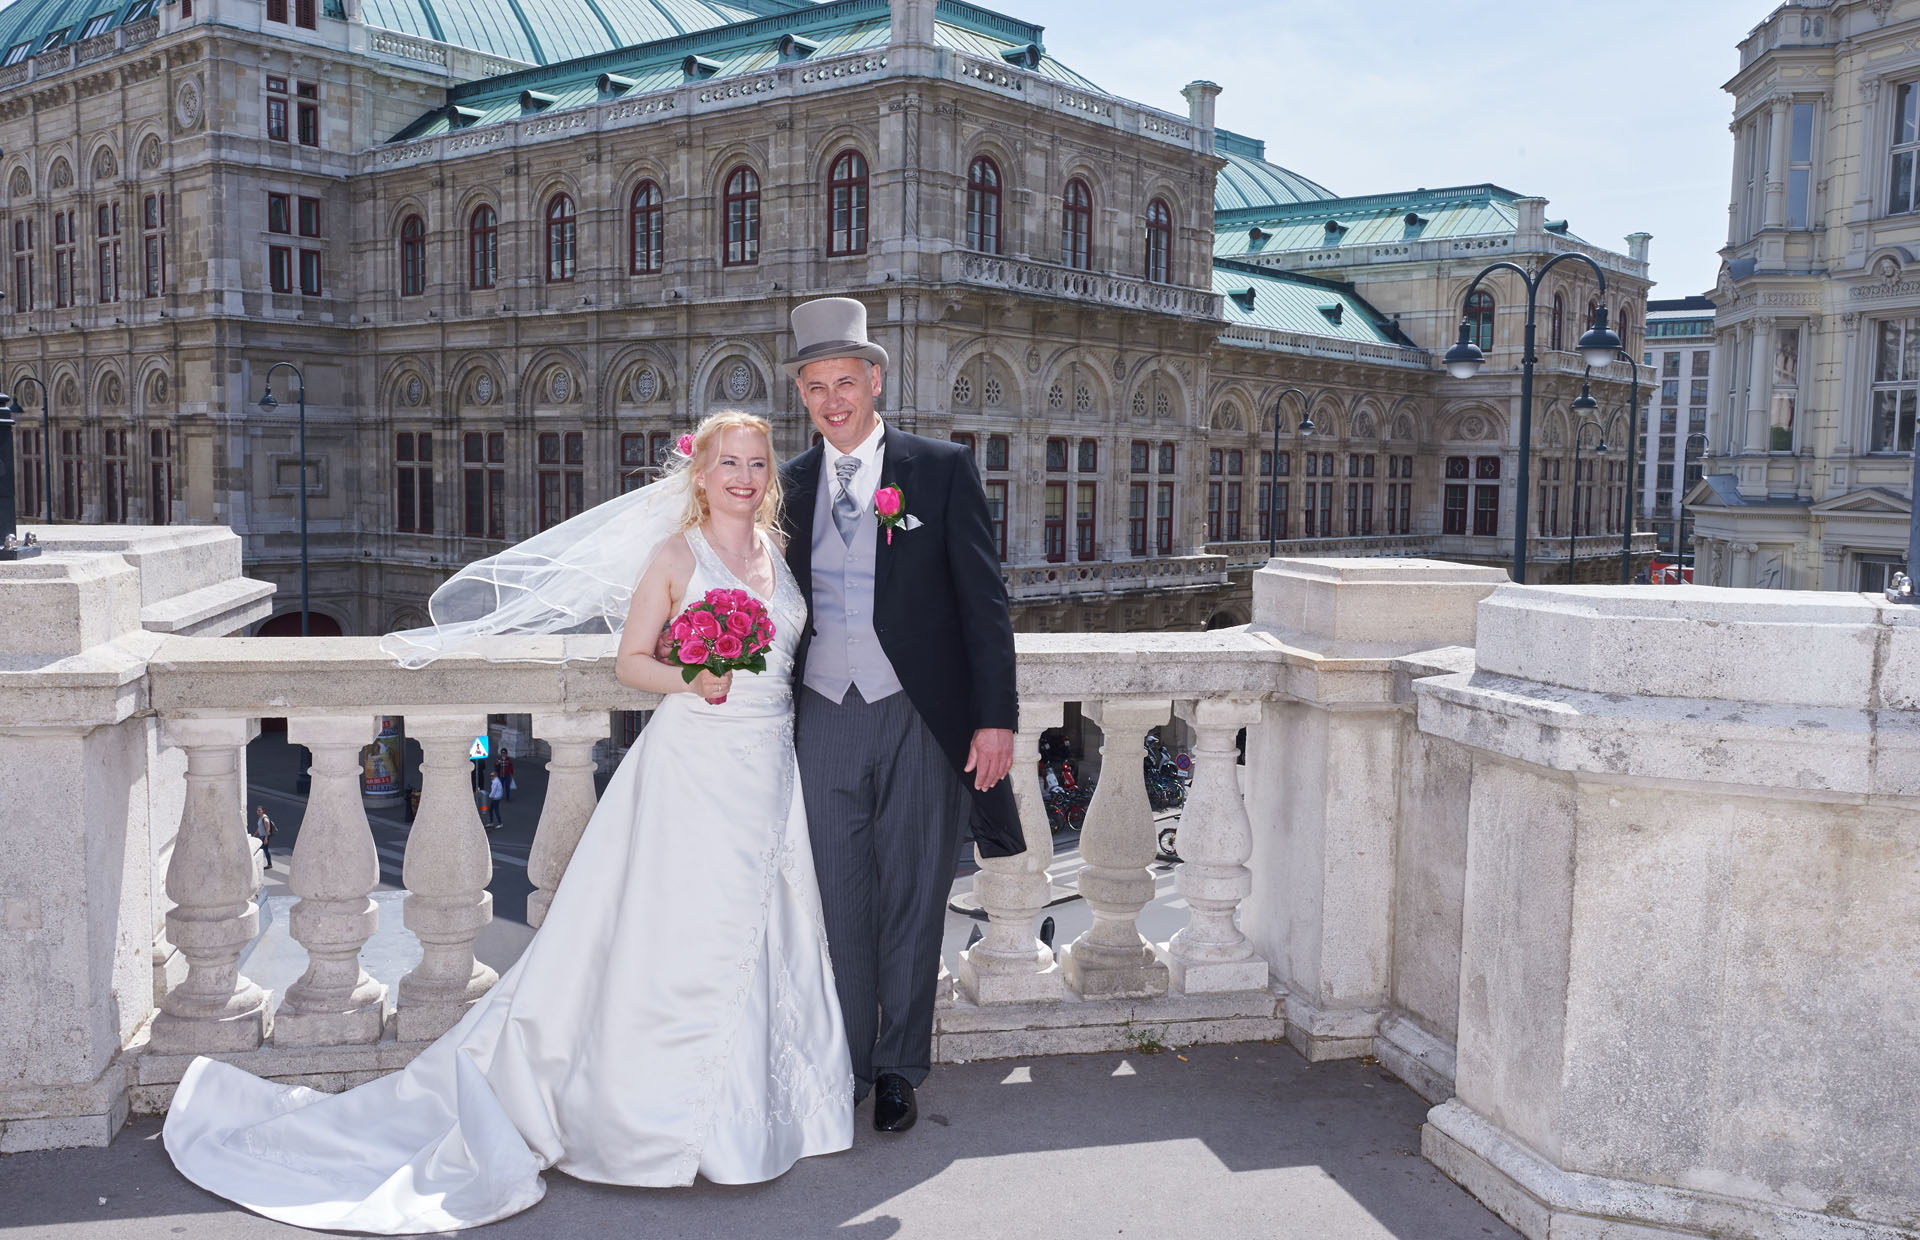 Hochzeitsfotograf Wien | Harald C. Sahling 0.56613800 1670343989